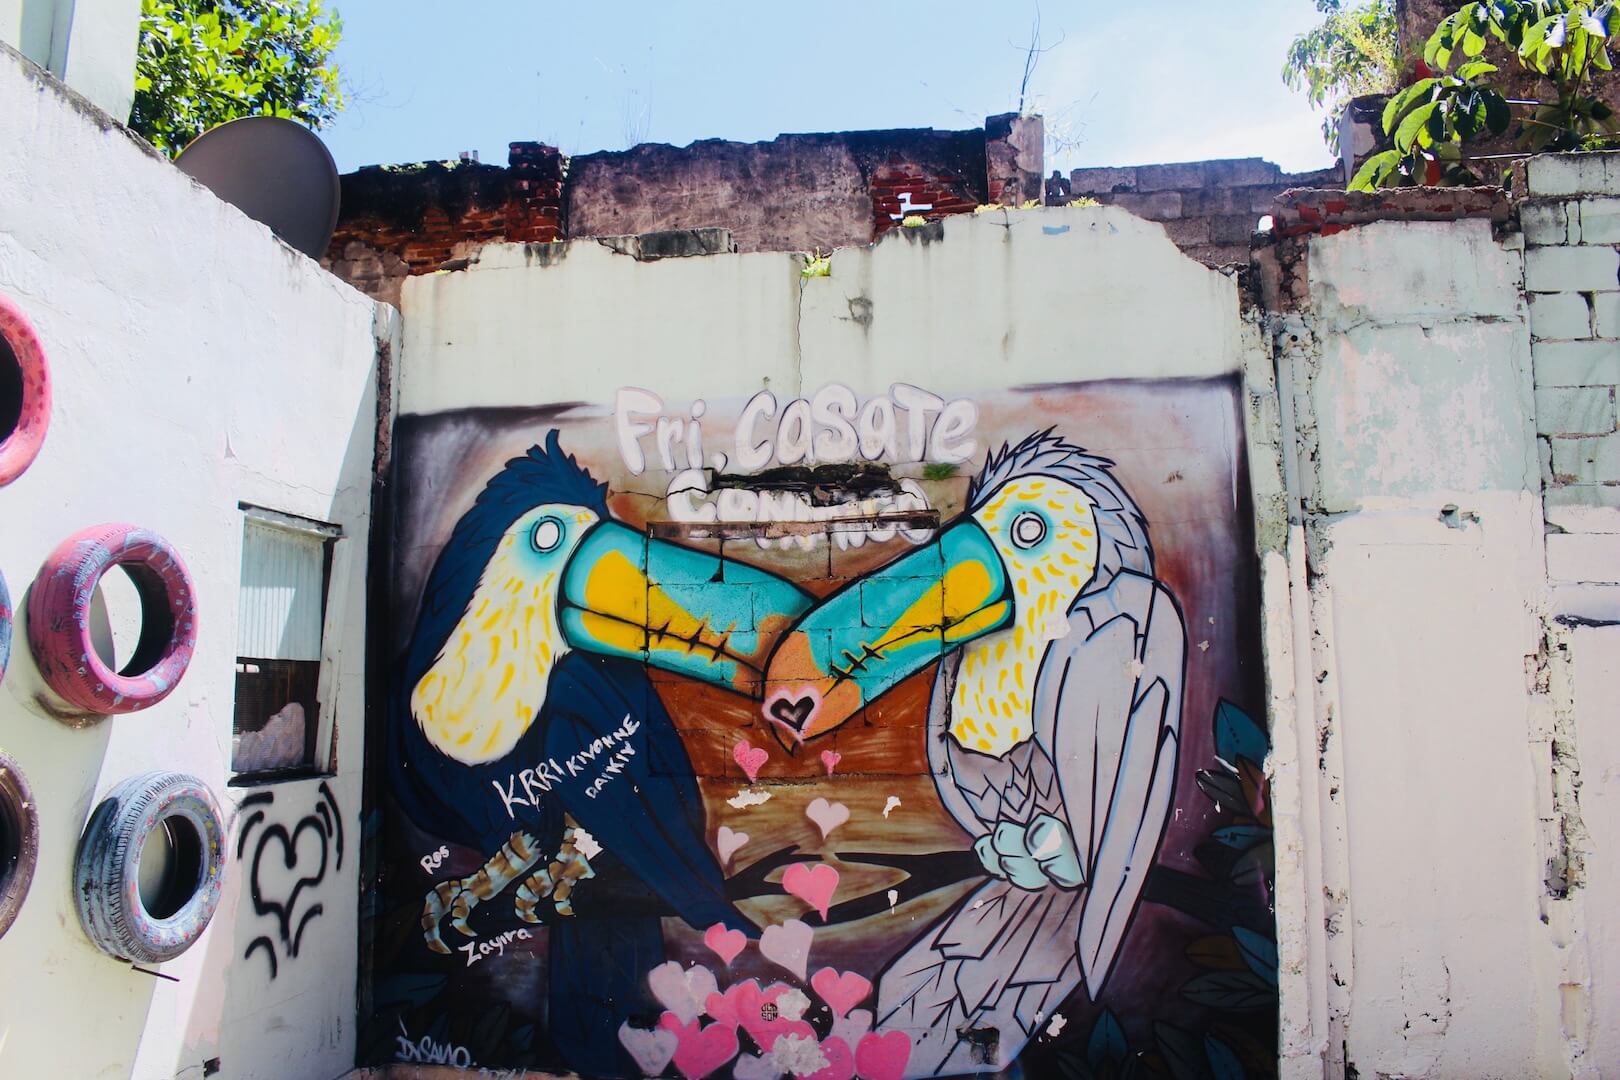 The Noriega Tapes Chapter 49 - Casco Viejo - Graffiti